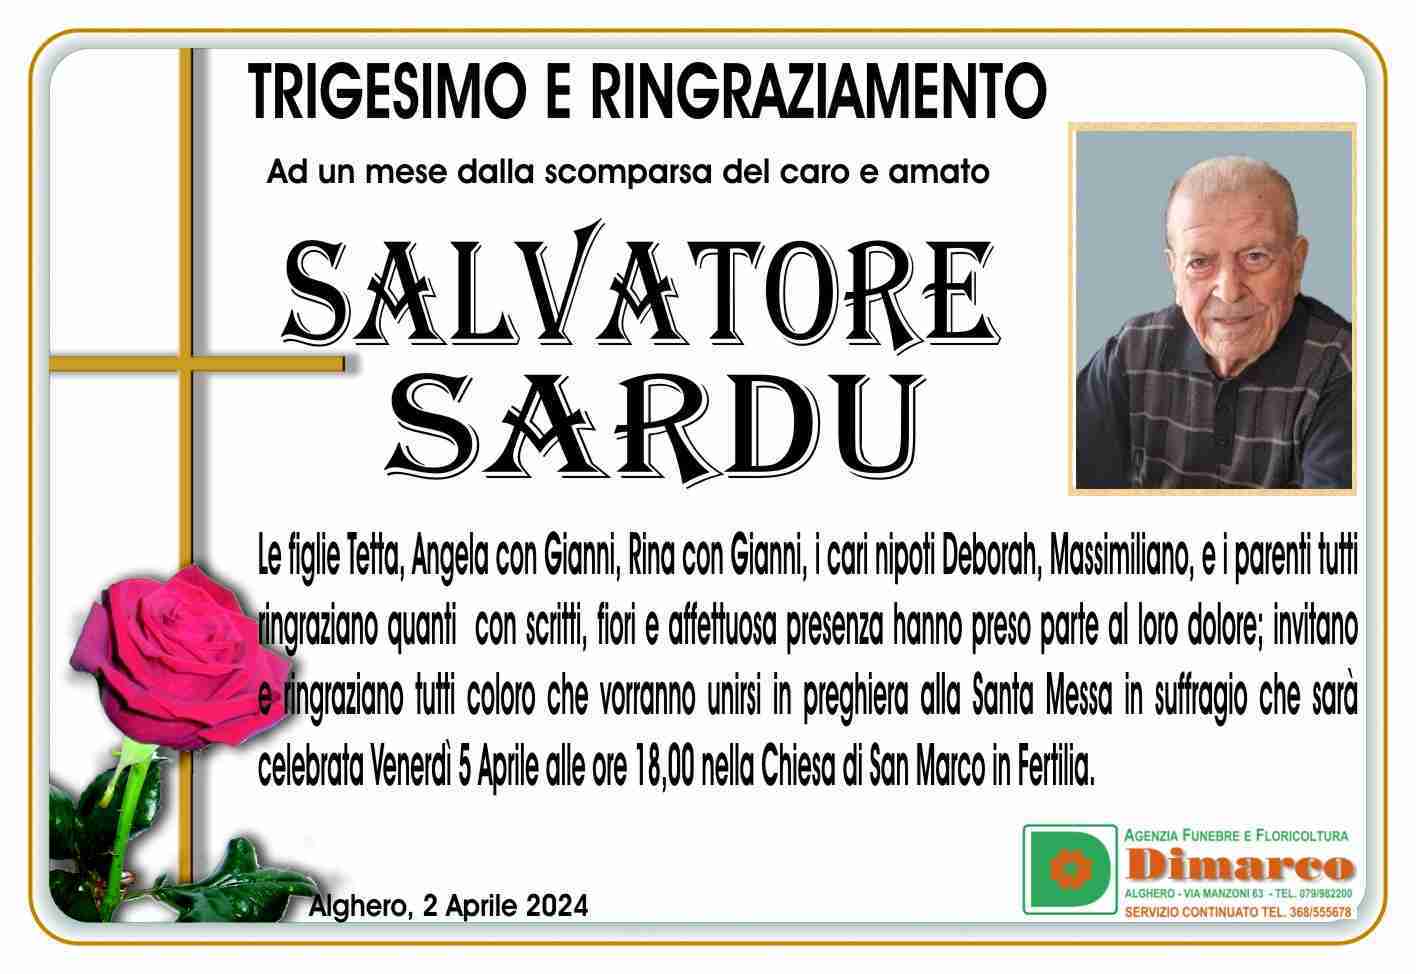 Salvatore Sardu